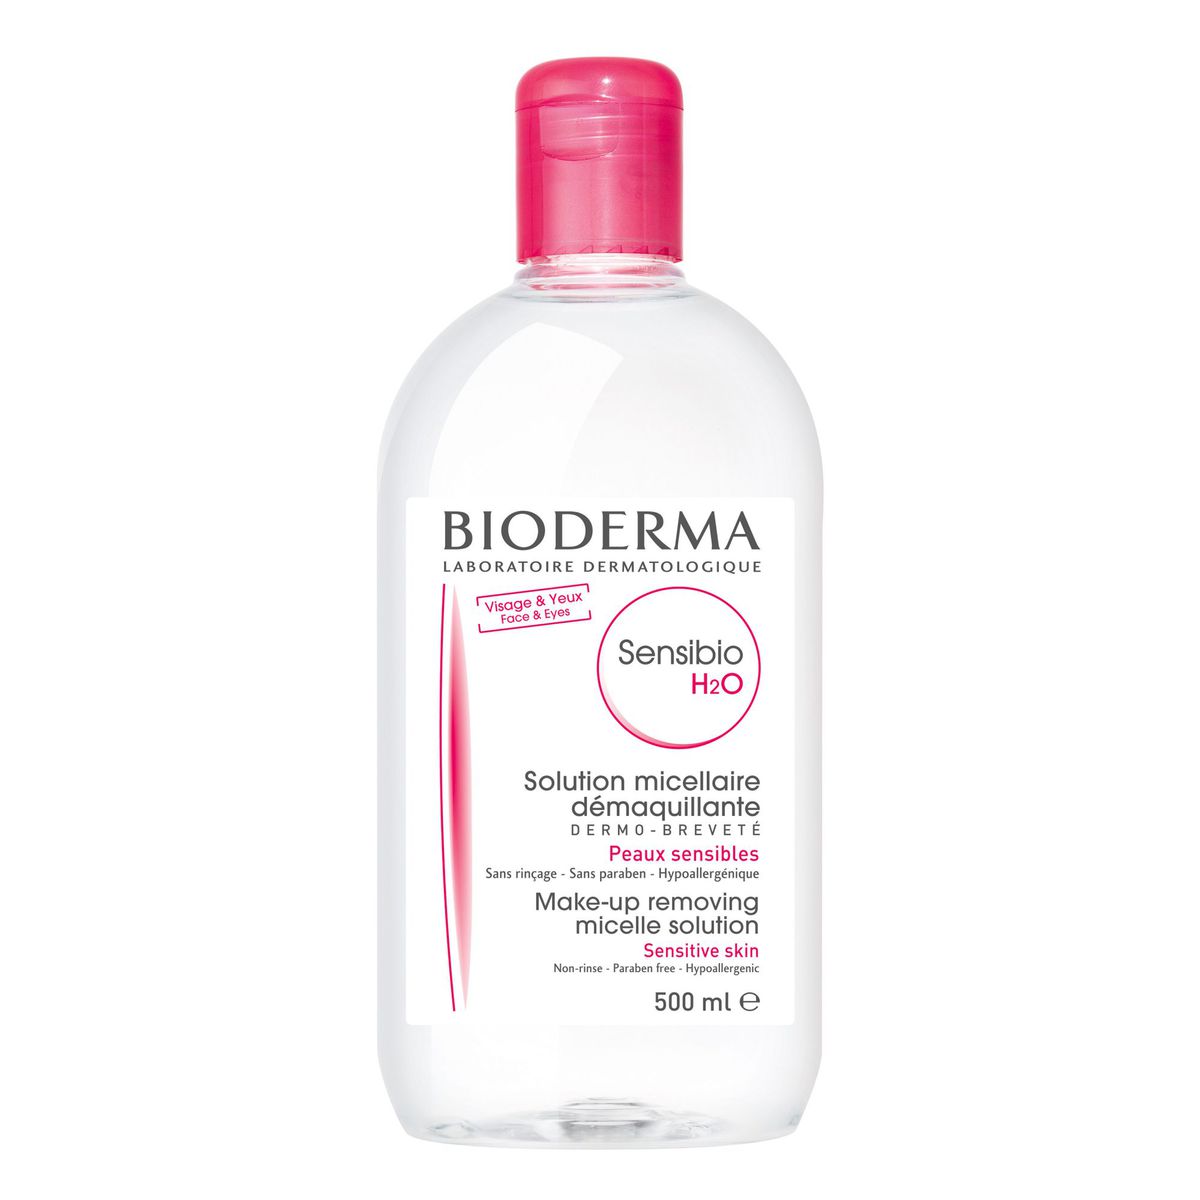 Bioderma Sensibio H2O Soothing Micellar Cleansing Water and Makeup Removing Solution for Sensitive Skin